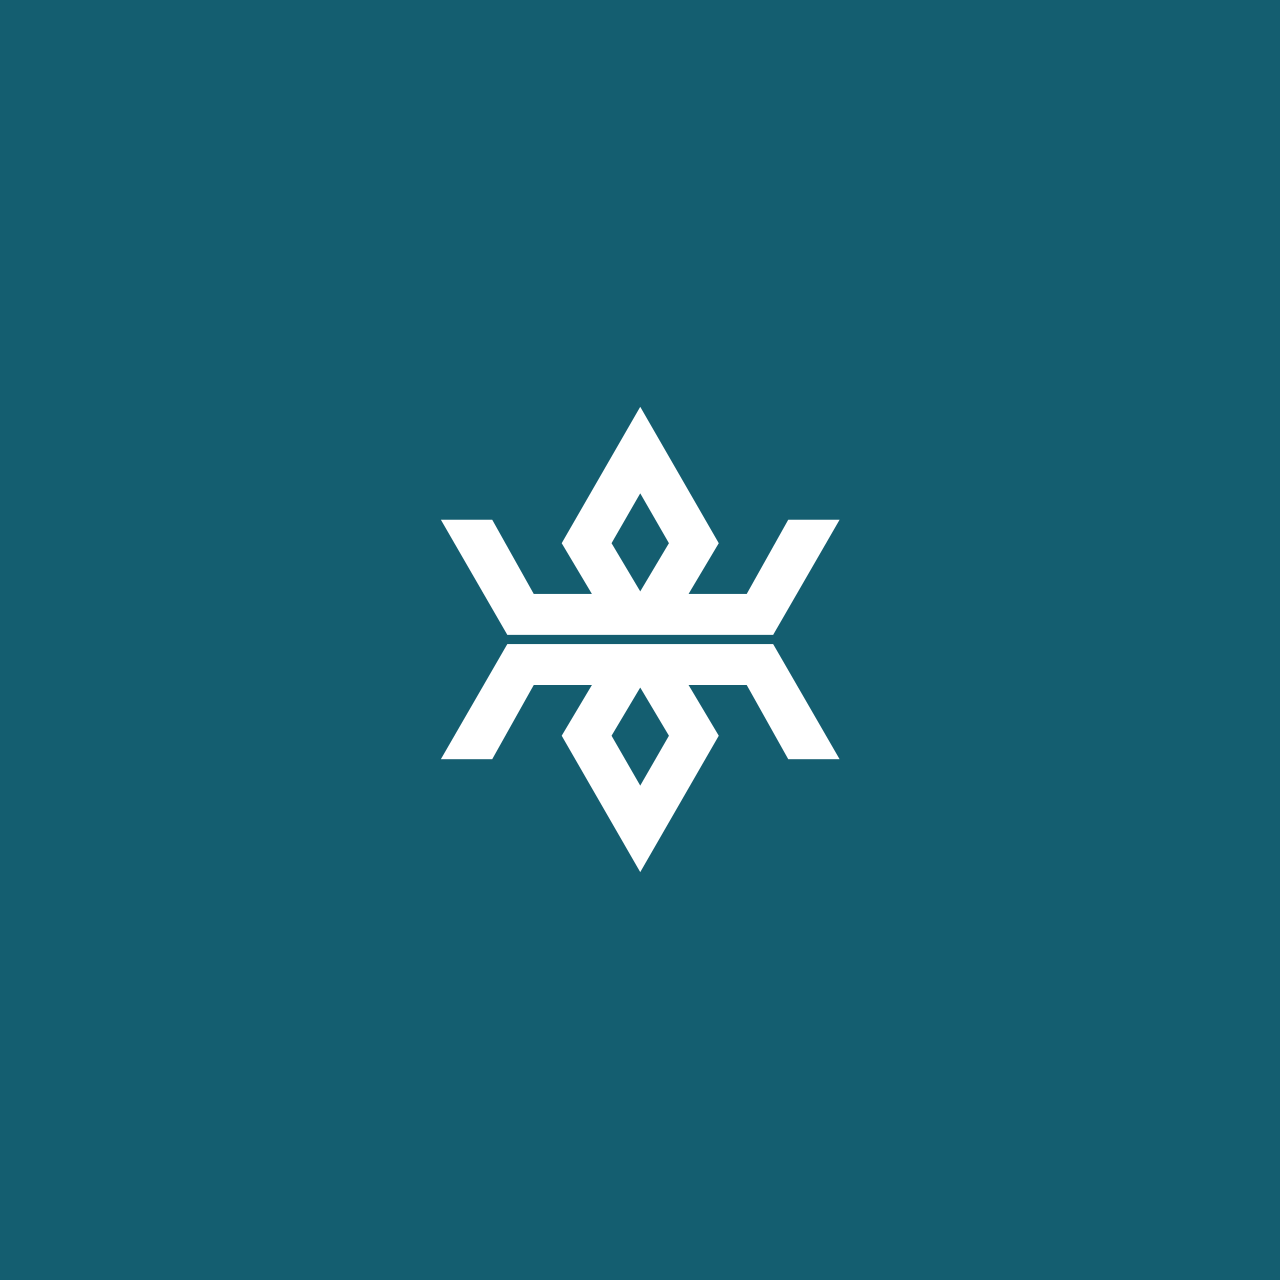 Iwate